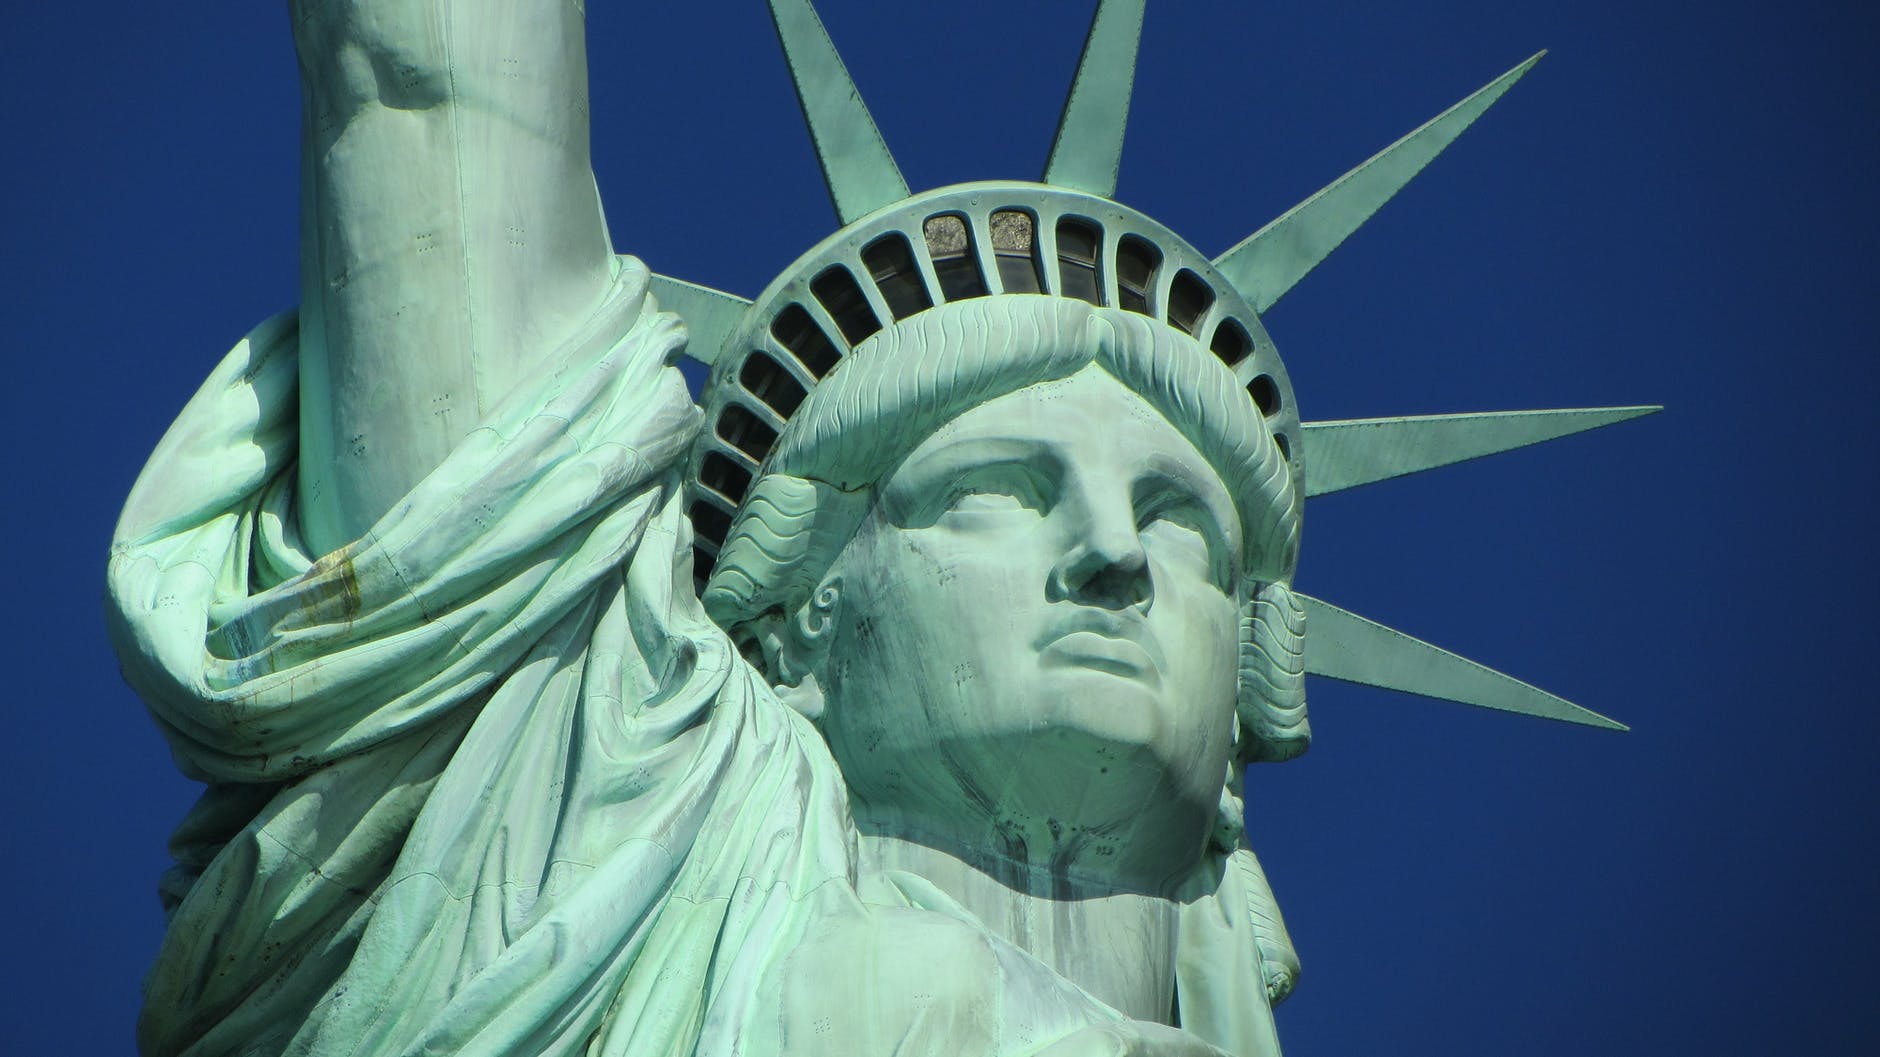 Visiter la Statue de la liberté